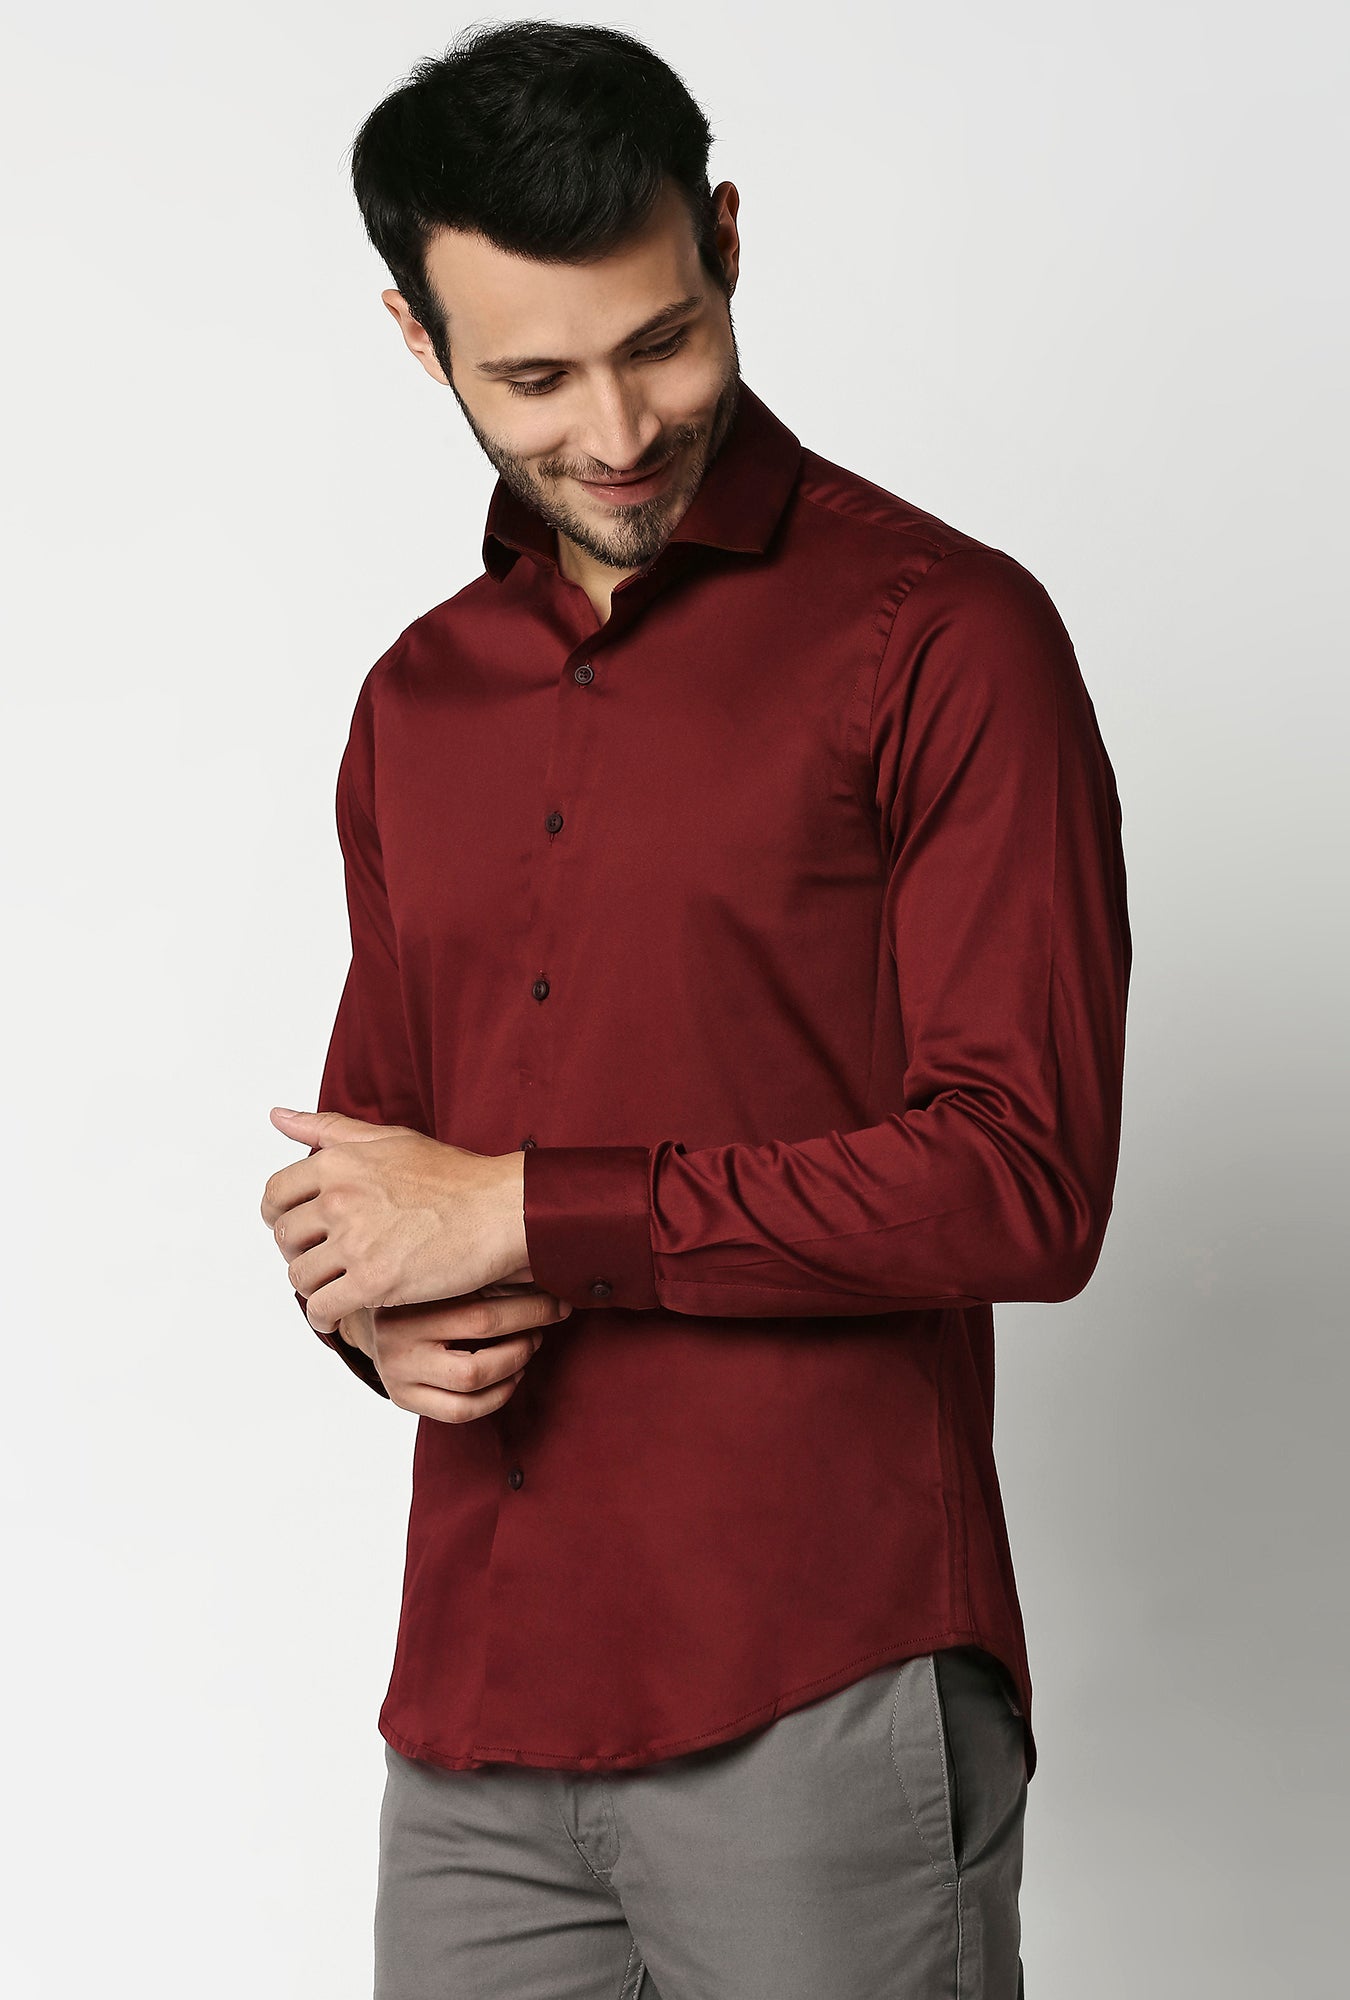 Fostino Plain Lycra Maroon Full Sleeves Shirt - Fostino - Shirts